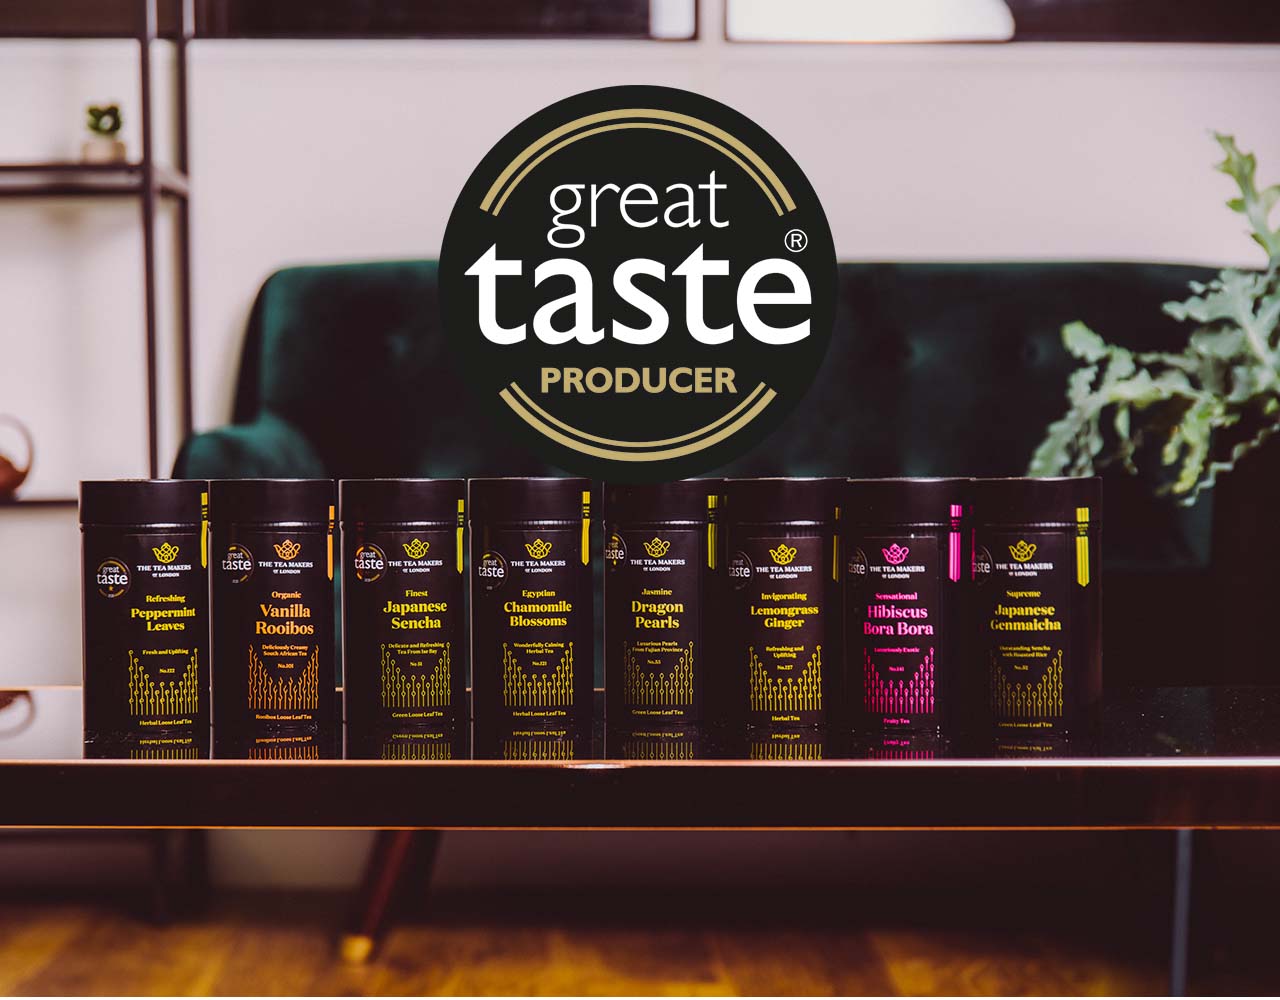 Great taste award winning teas with the great taste producer logo